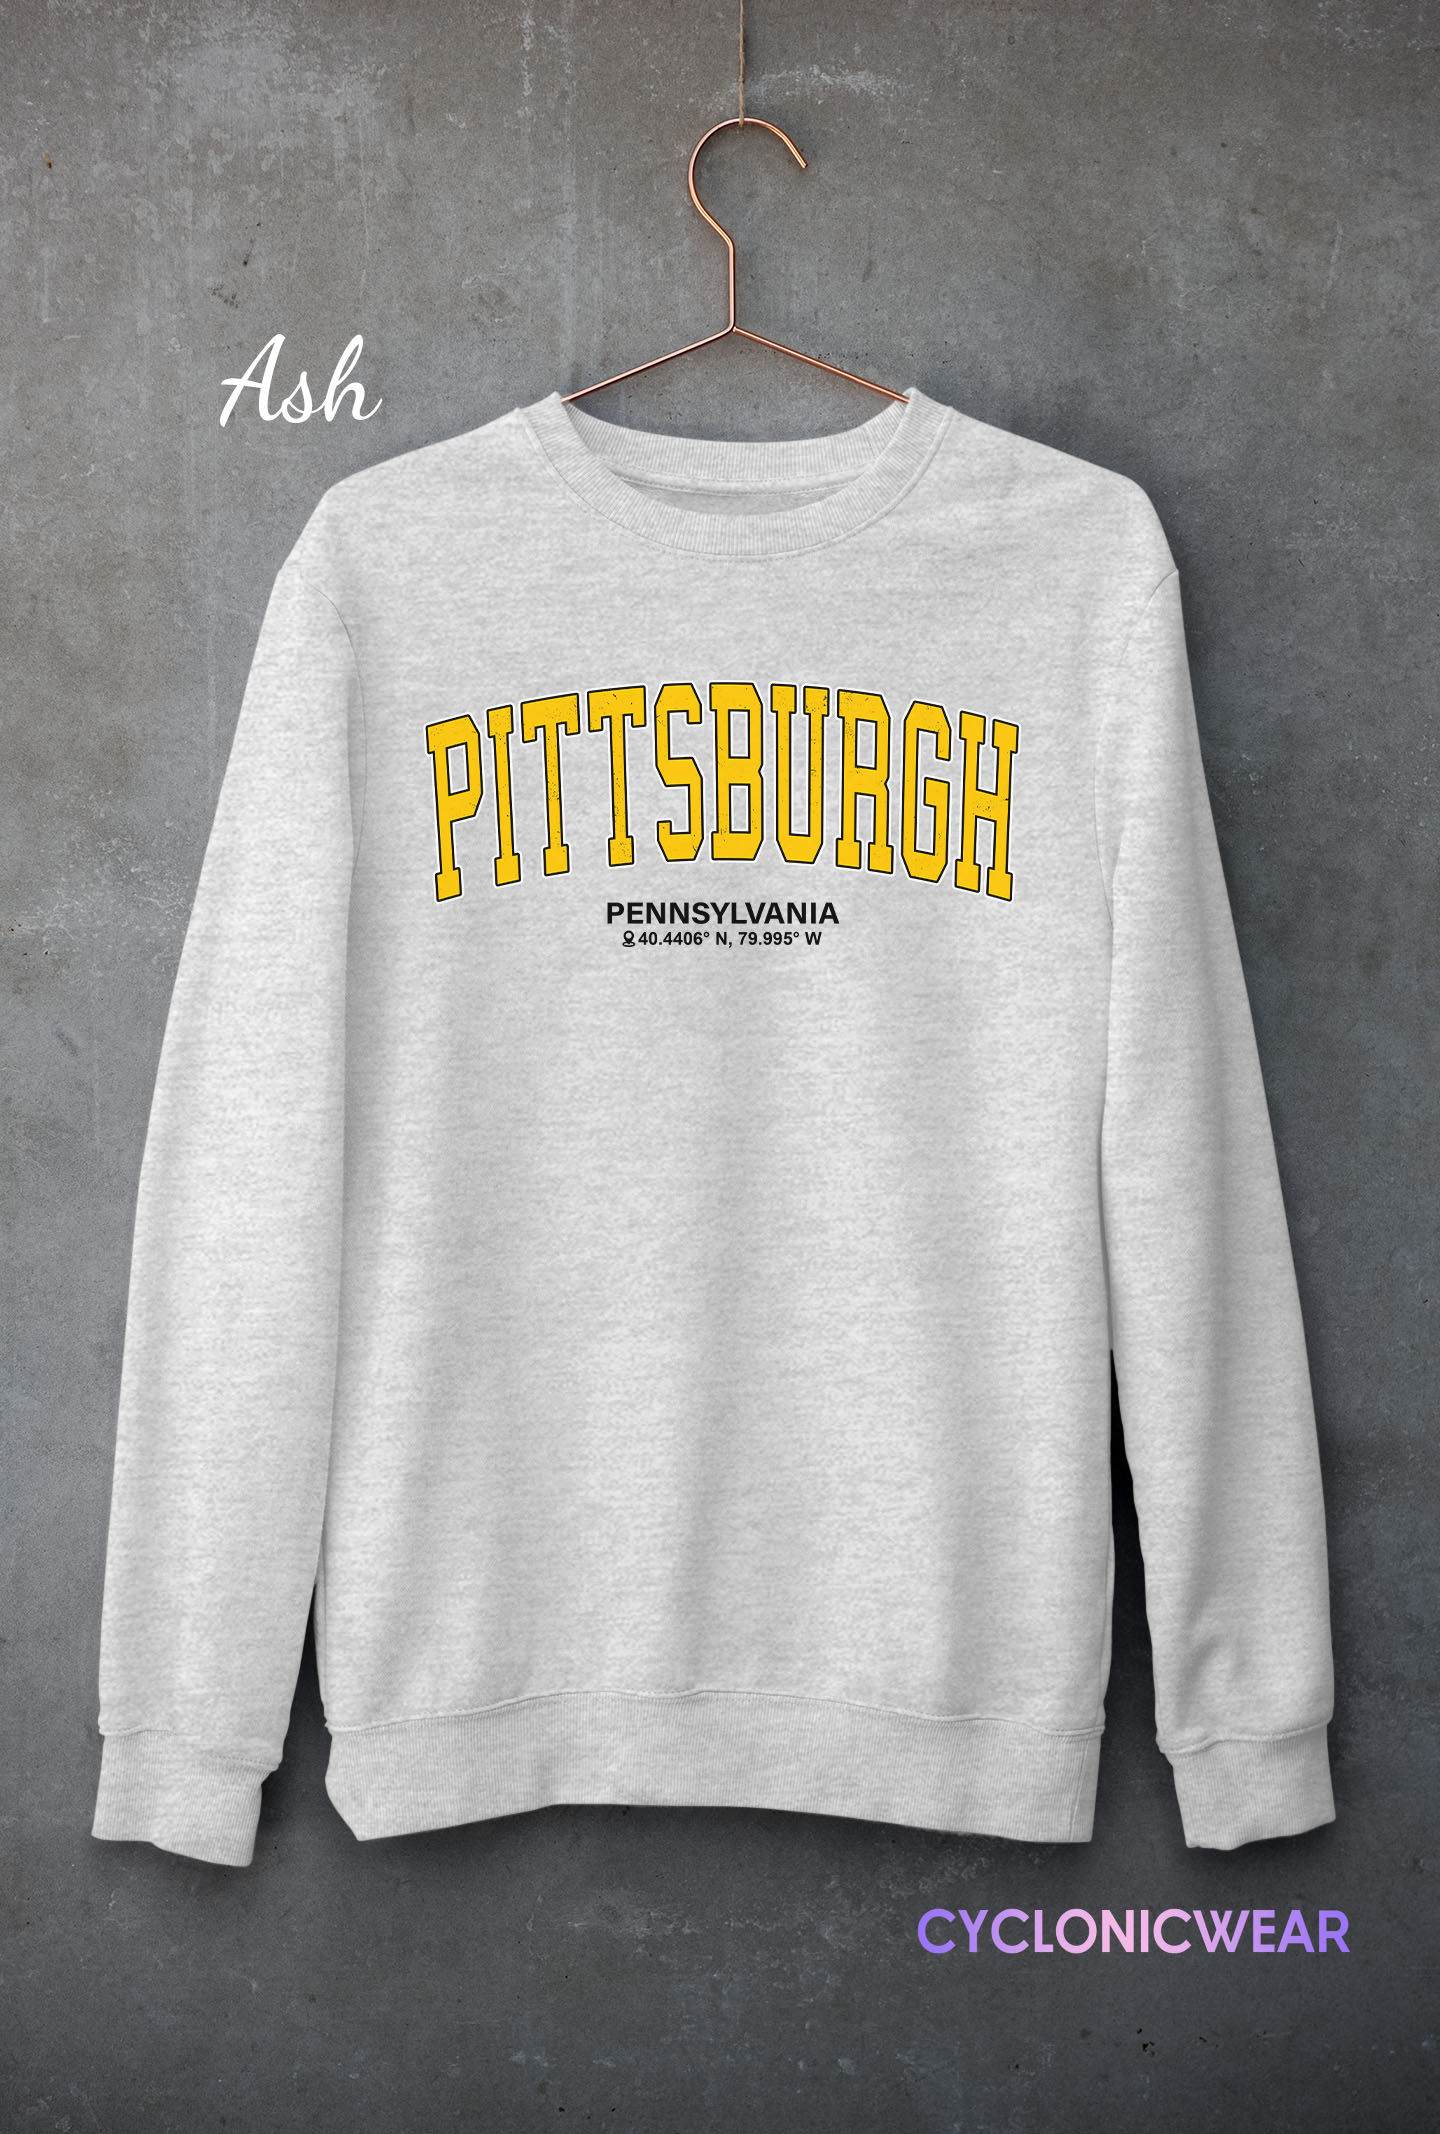 Retro Vintage Style Pittsburgh Sweatshirt